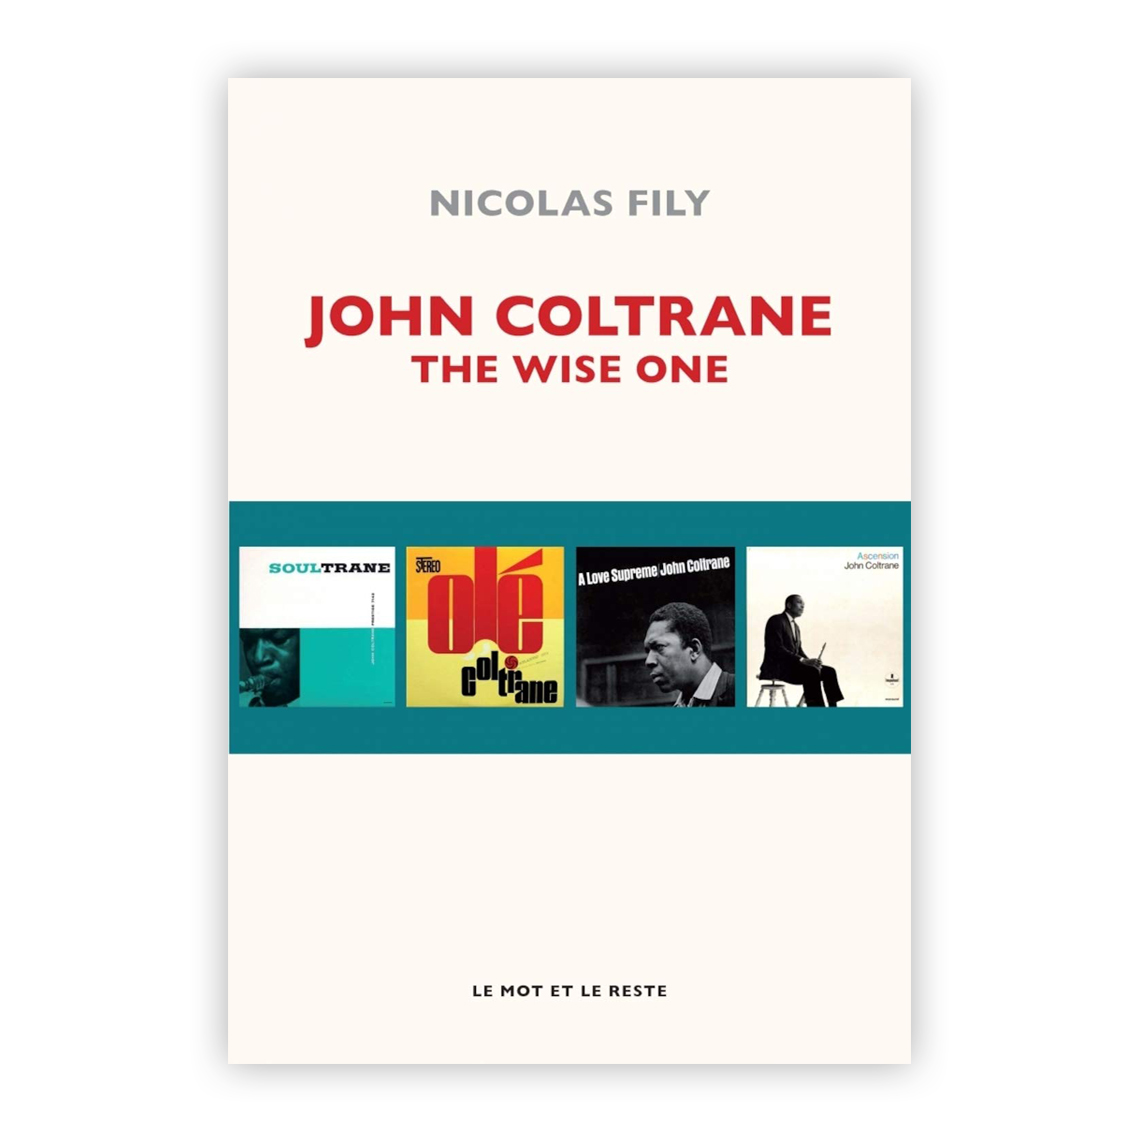 John Coltrane : The Wise One Broché – Illustré, 21 mars 2019 de Nicolas Fily (Auteur)